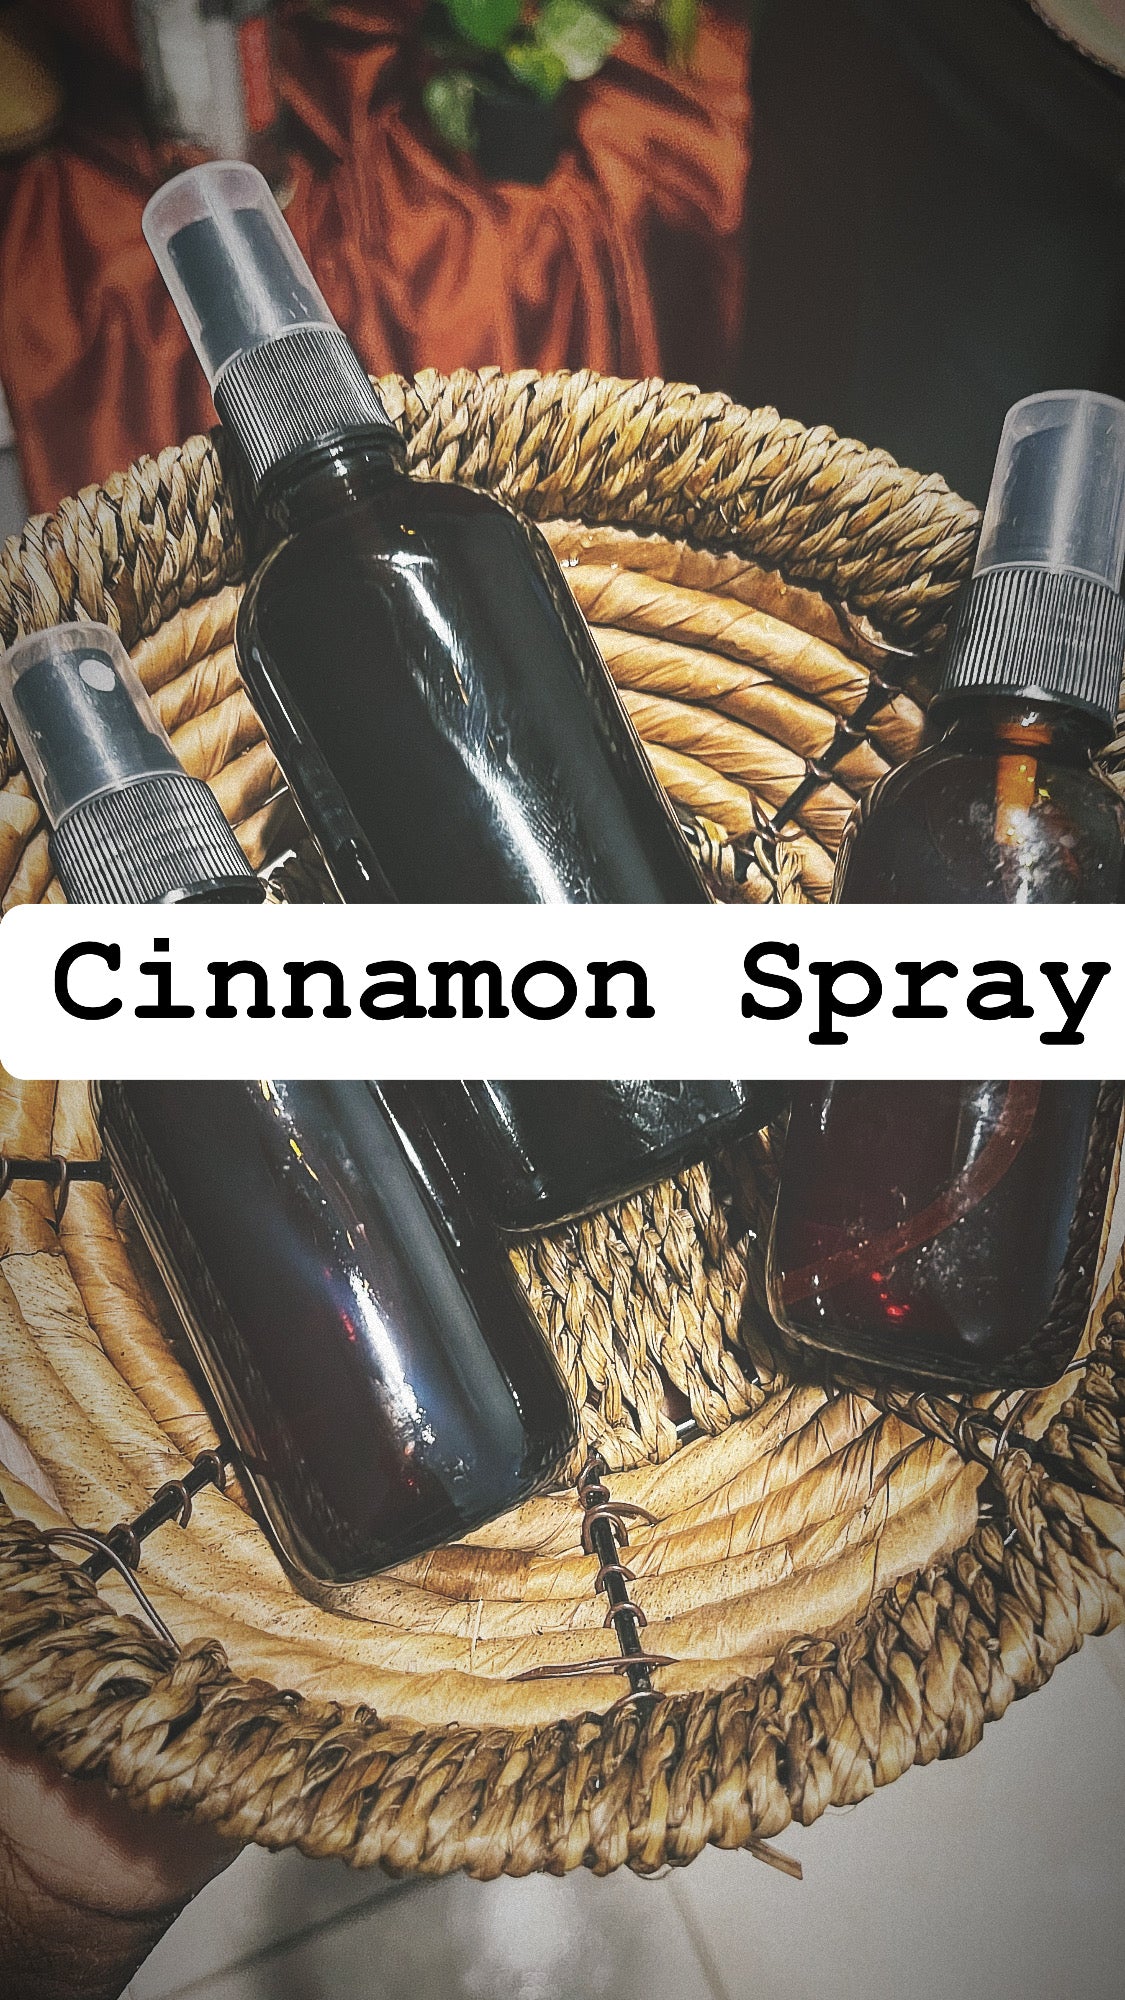 Canela / Cinnamon Spray (Prosperity, Luck, Power)